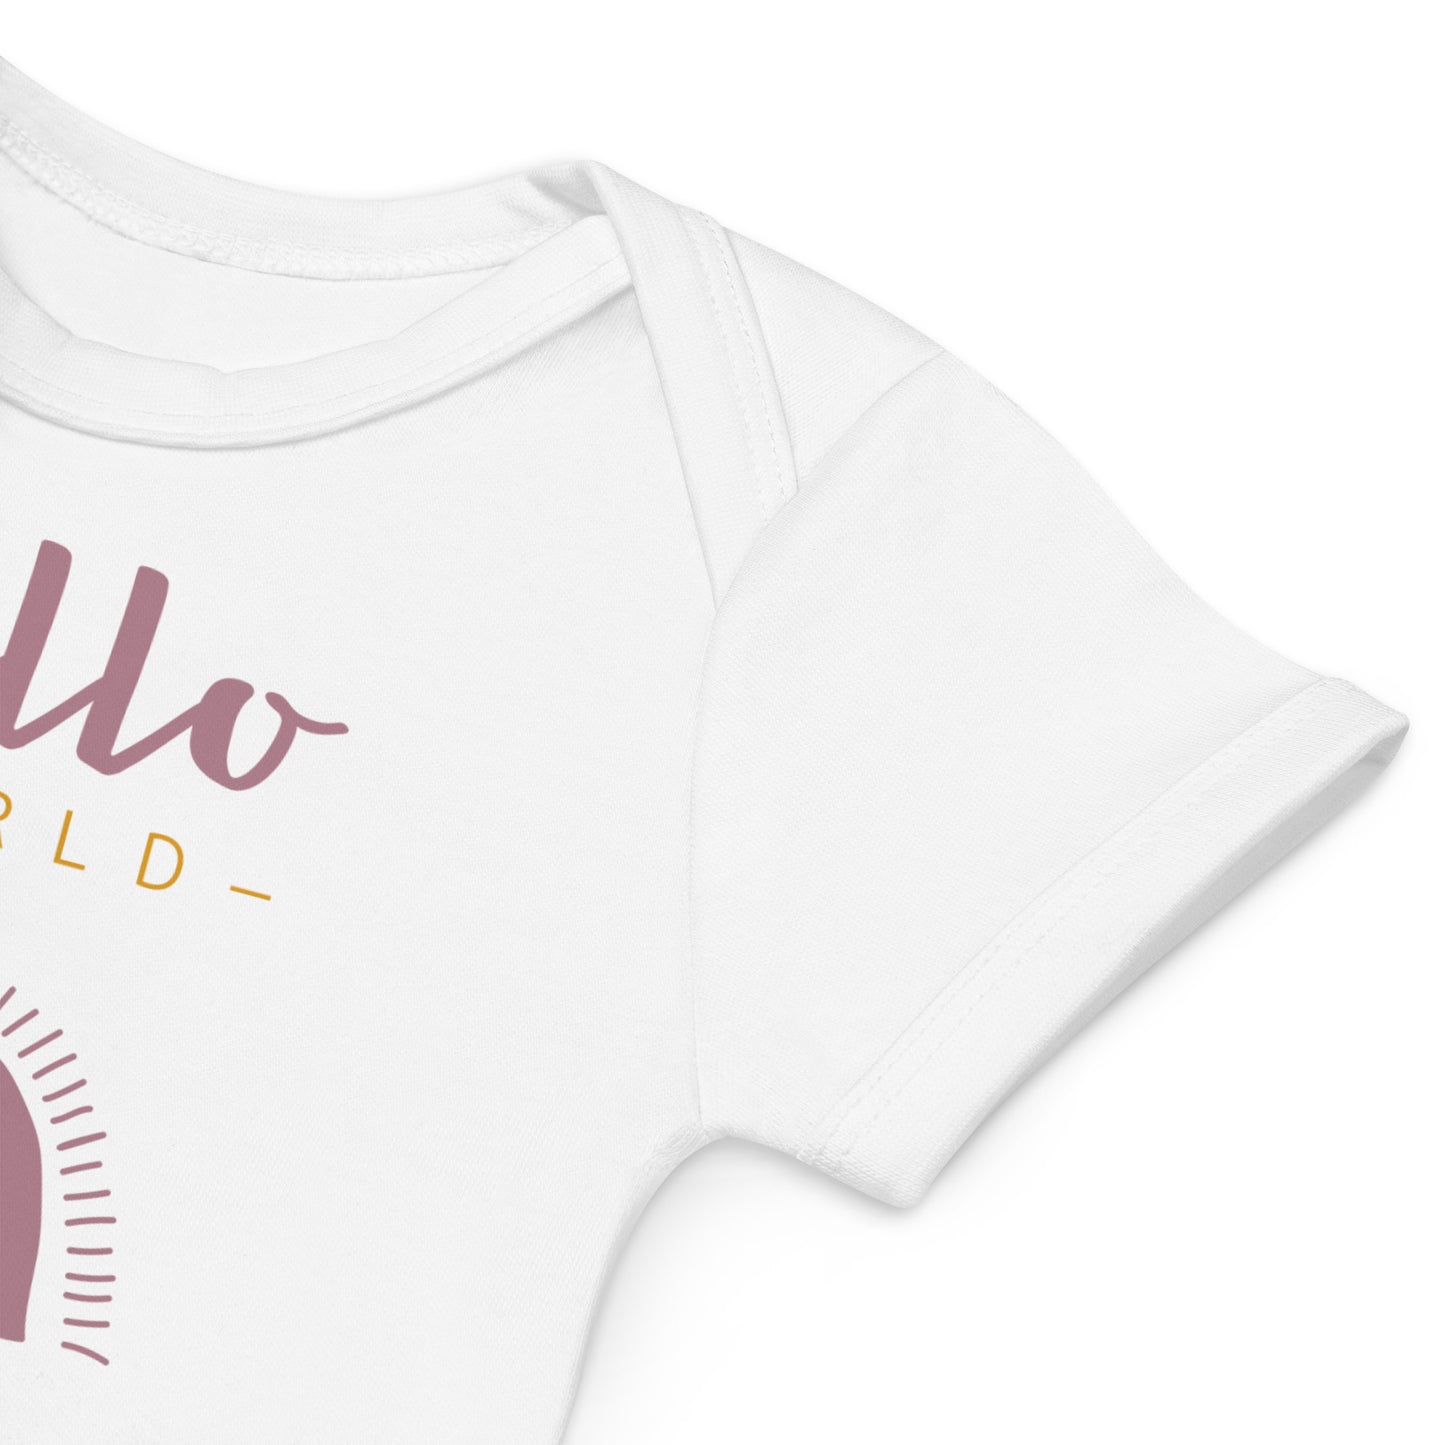 Organic cotton baby bodysuit - Hello World I Am Here